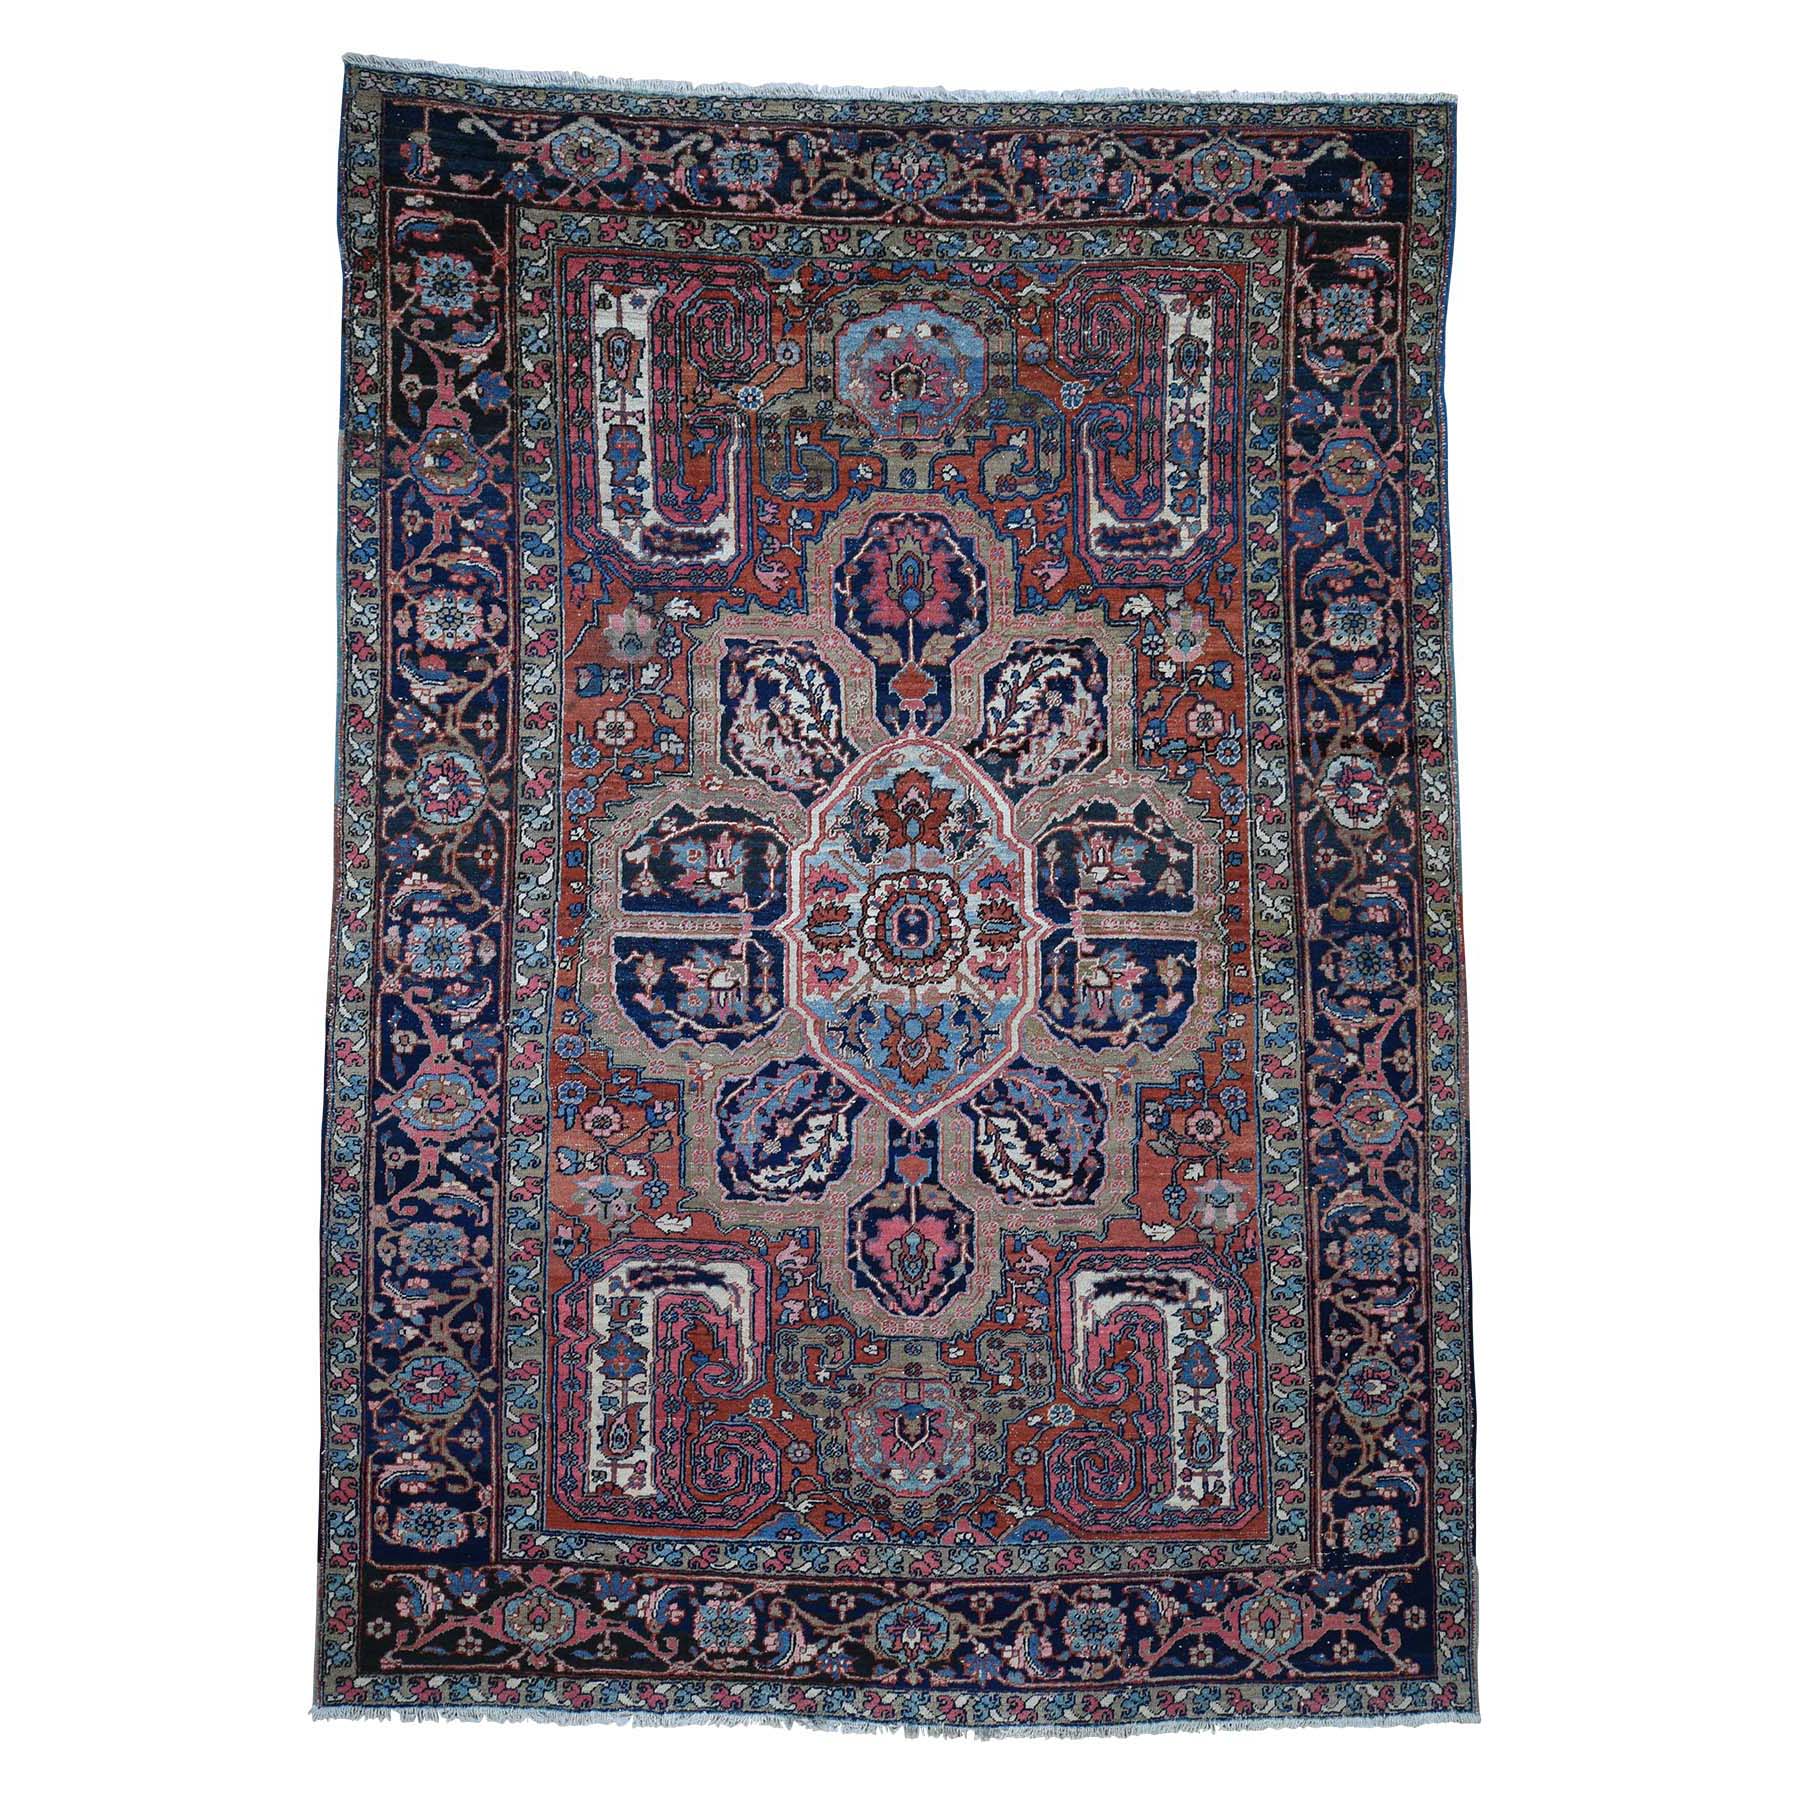 7'9"x11' Flower Design Antique Persian Heriz Good Condition Hand Woven Oriental Rug 